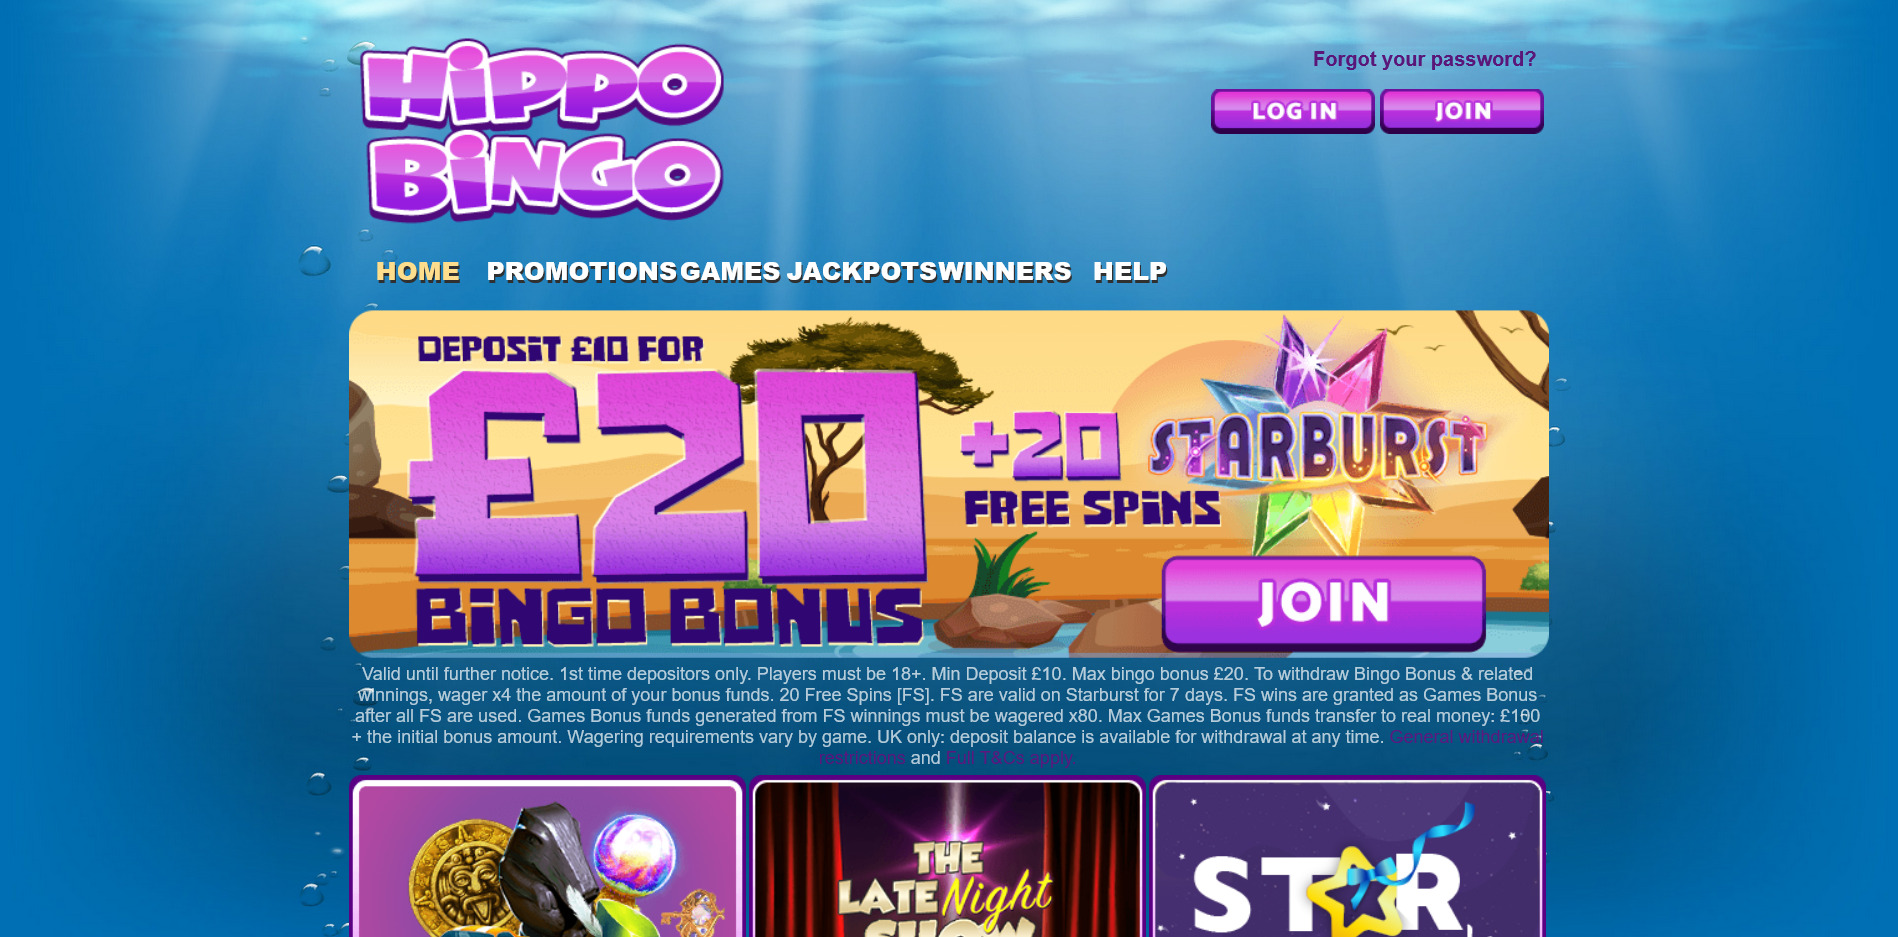 Hippo Bingo Casino Review